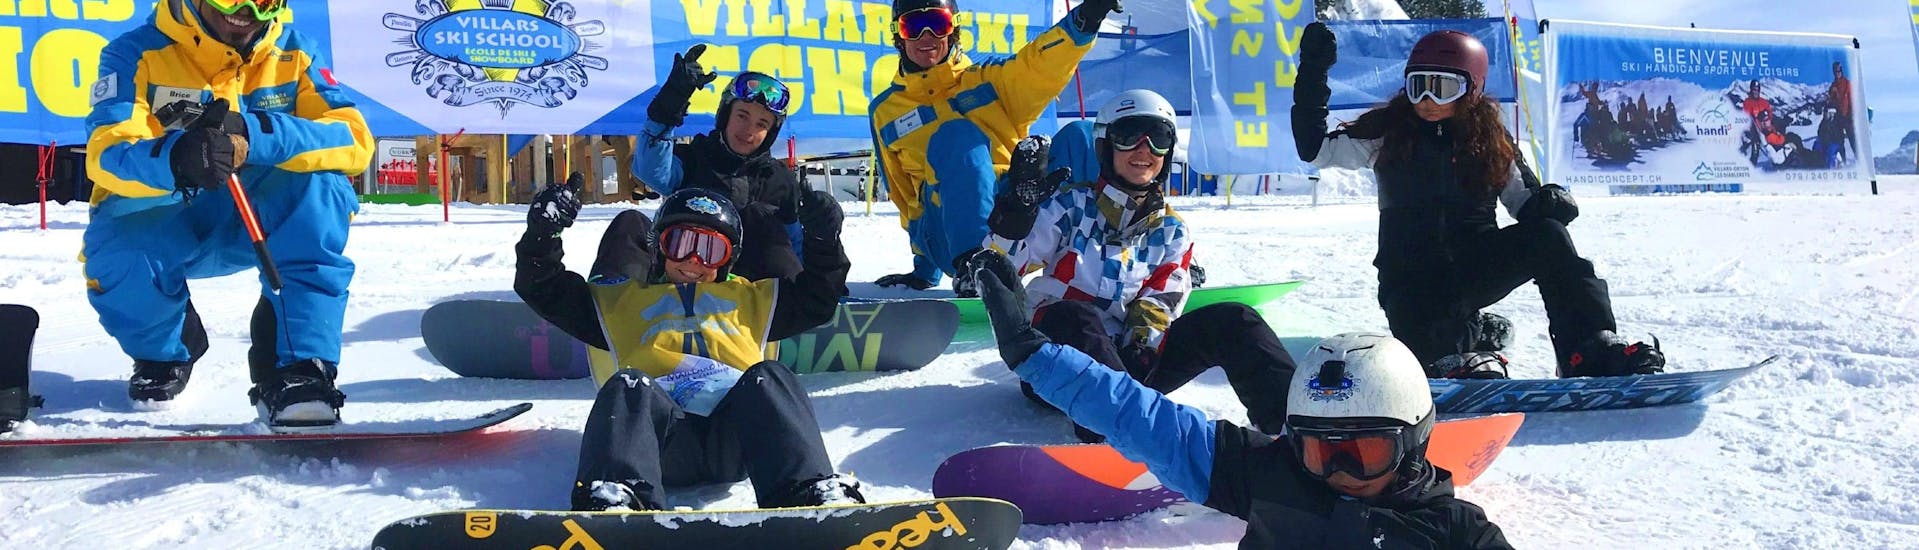 snowboarding-lessons-villars-ski-school-hero